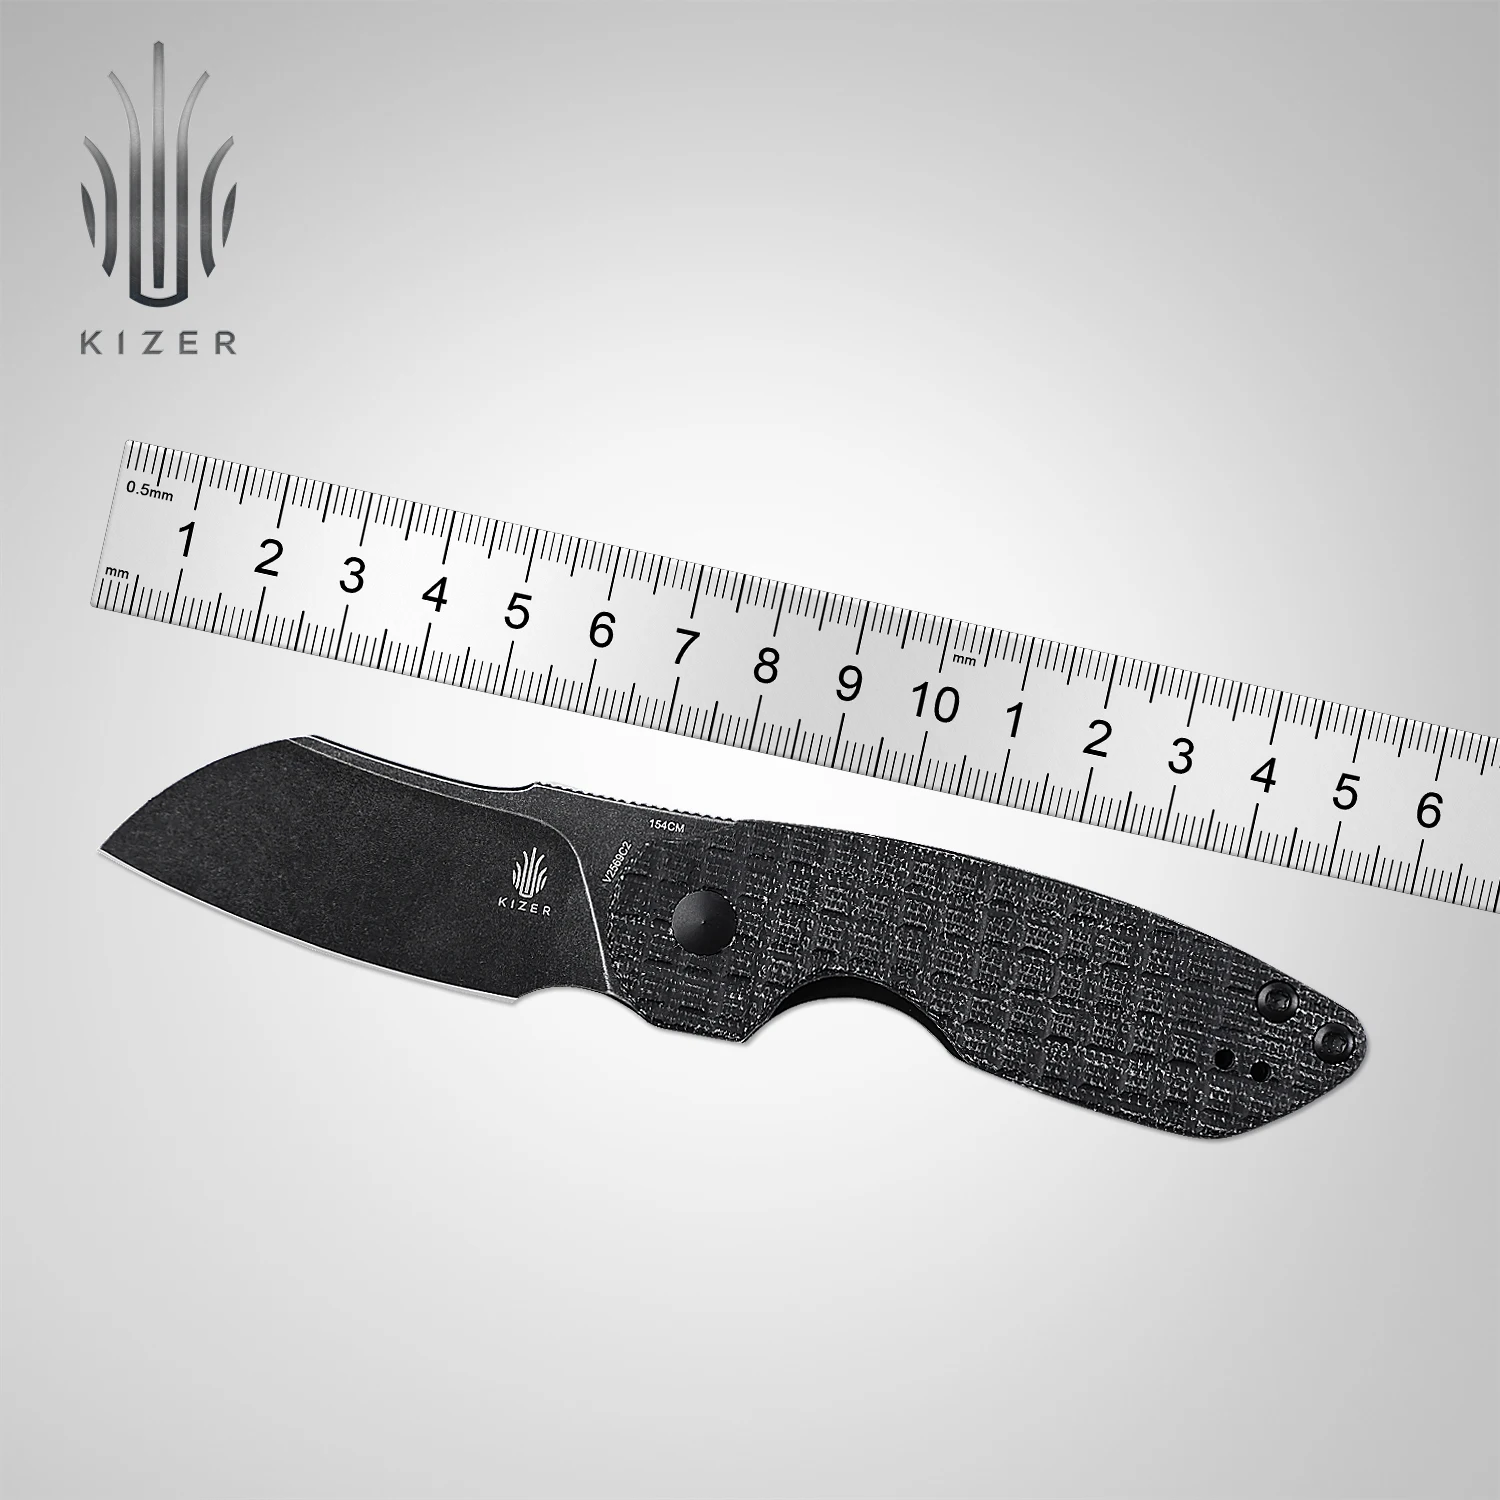 Kizer Pocket Knife V2569C1/V2569C2 OCTOBER Mini 2022 New Folding EDC Knife with Black Micarta/Green G10 Handle Outdoor Tools